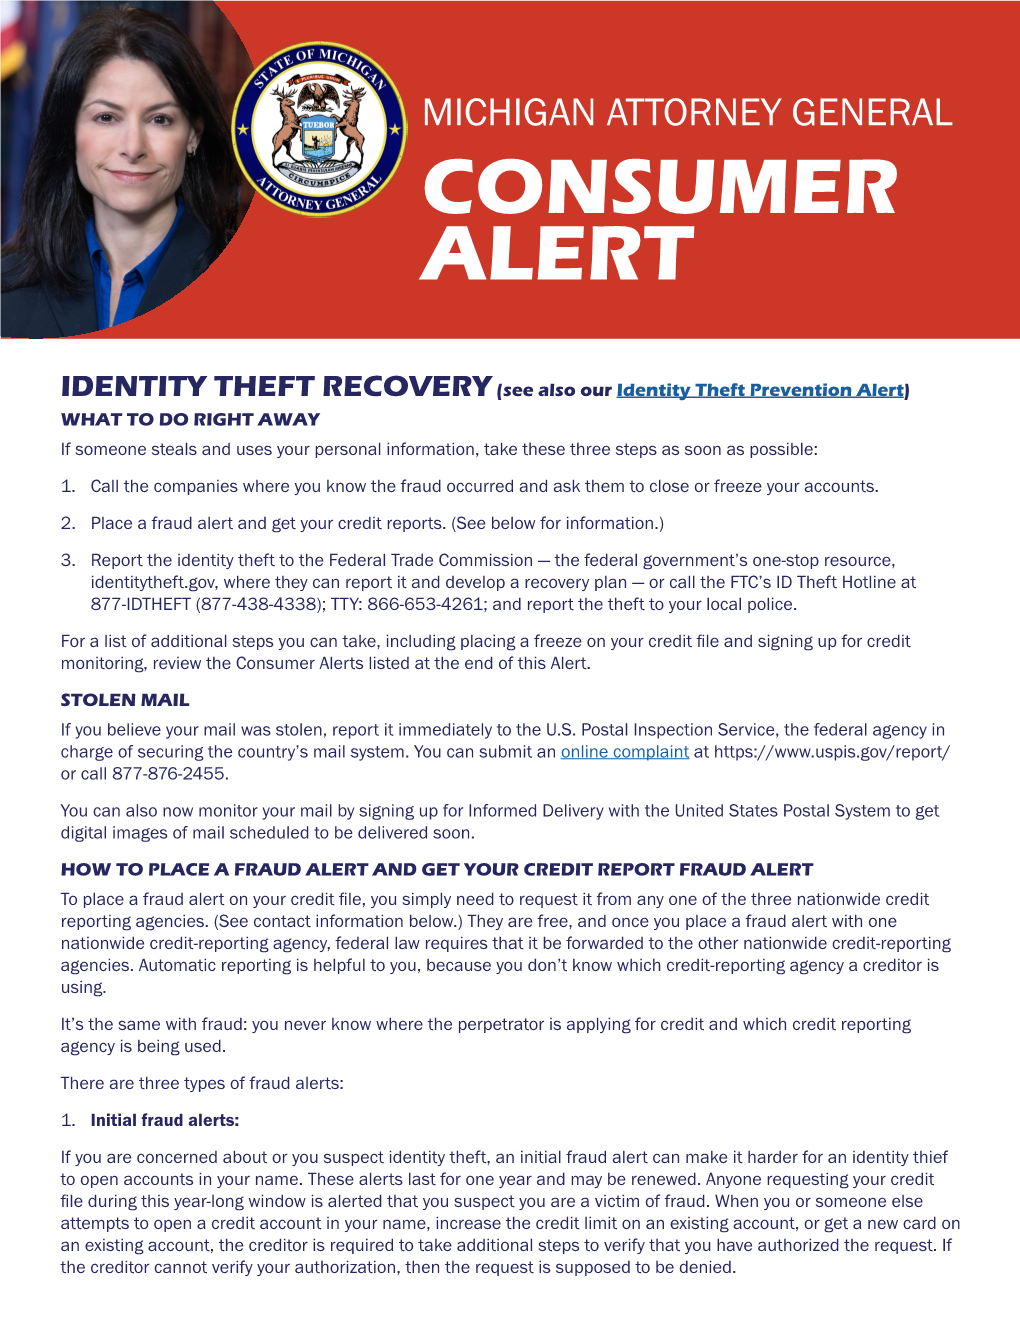 Identity Theft Recovery Consumer Alert